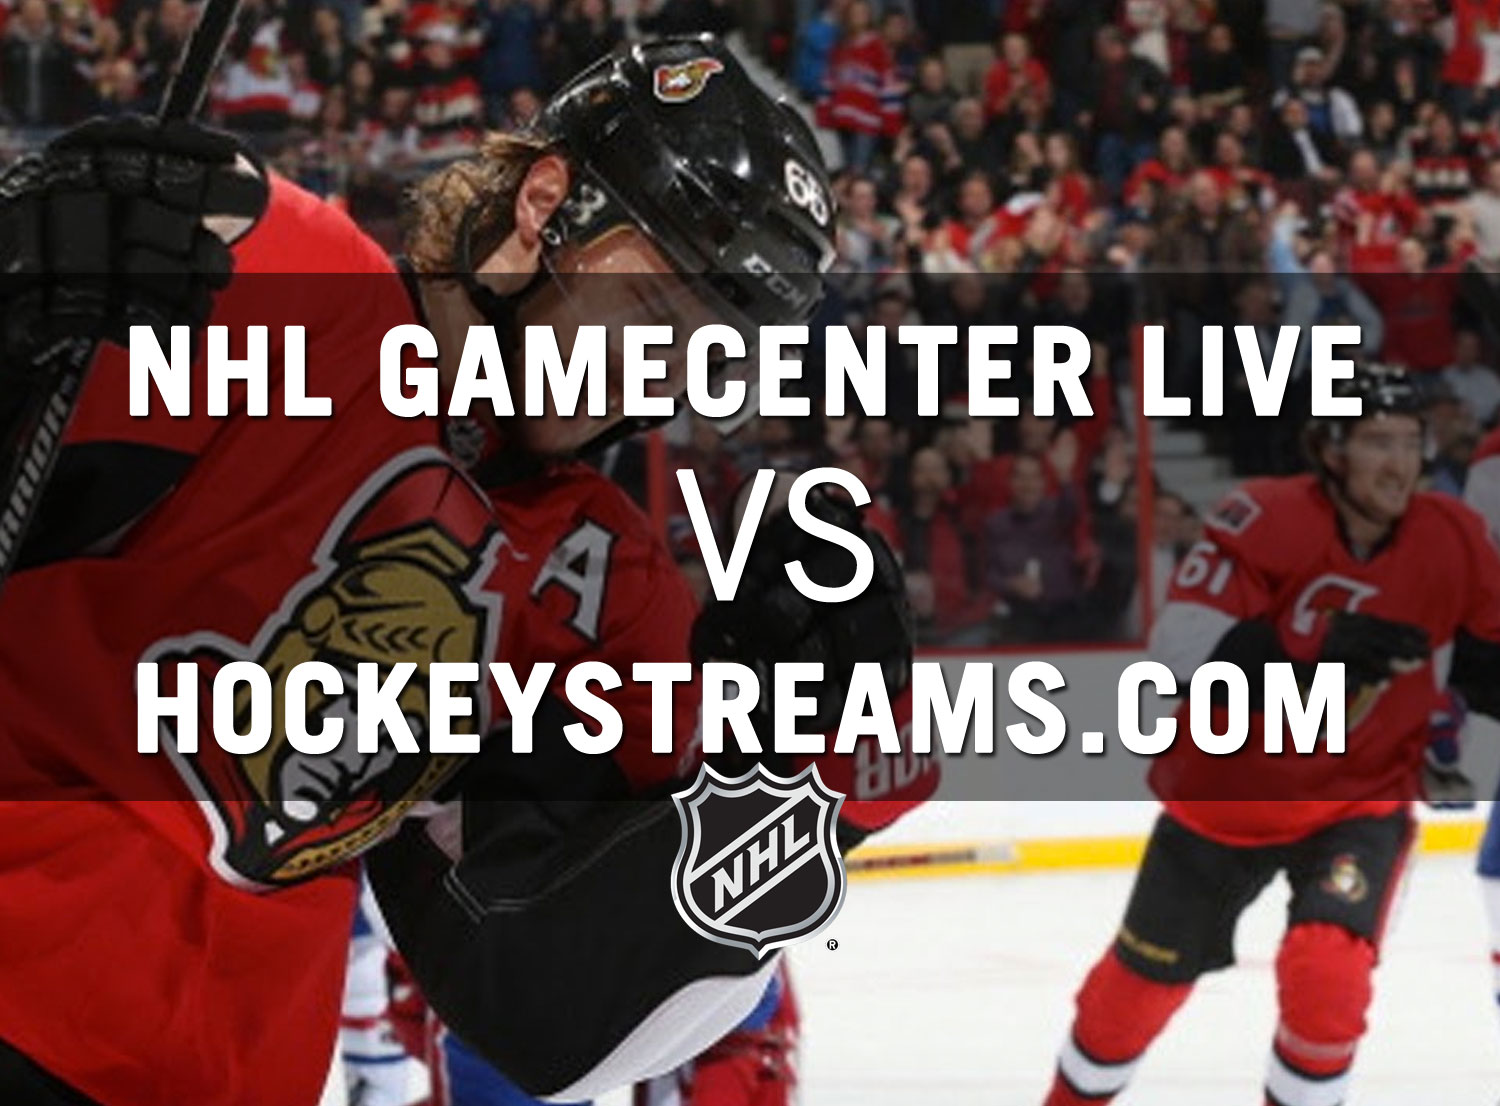 NHL Gamecenter Live VS Hockeystreams.com